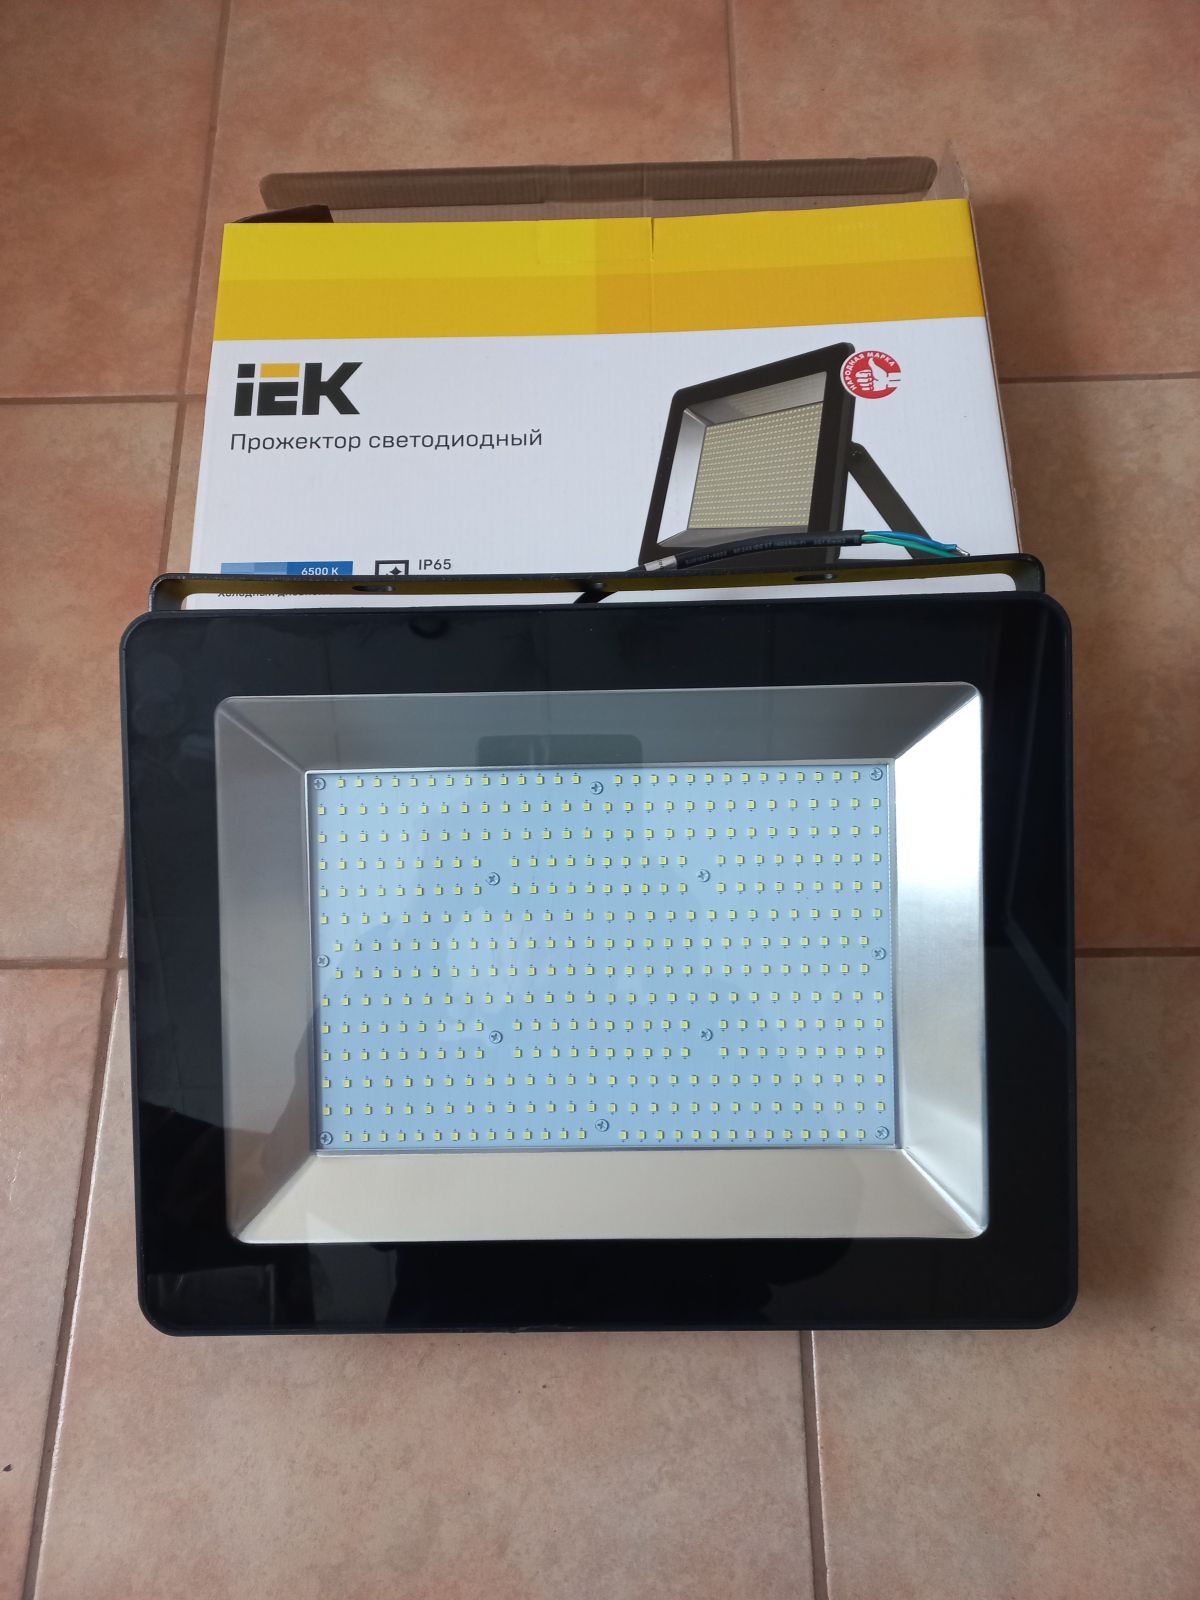 LED prožektor IEK 06-200, 200 W, 6500 K, IP65, must